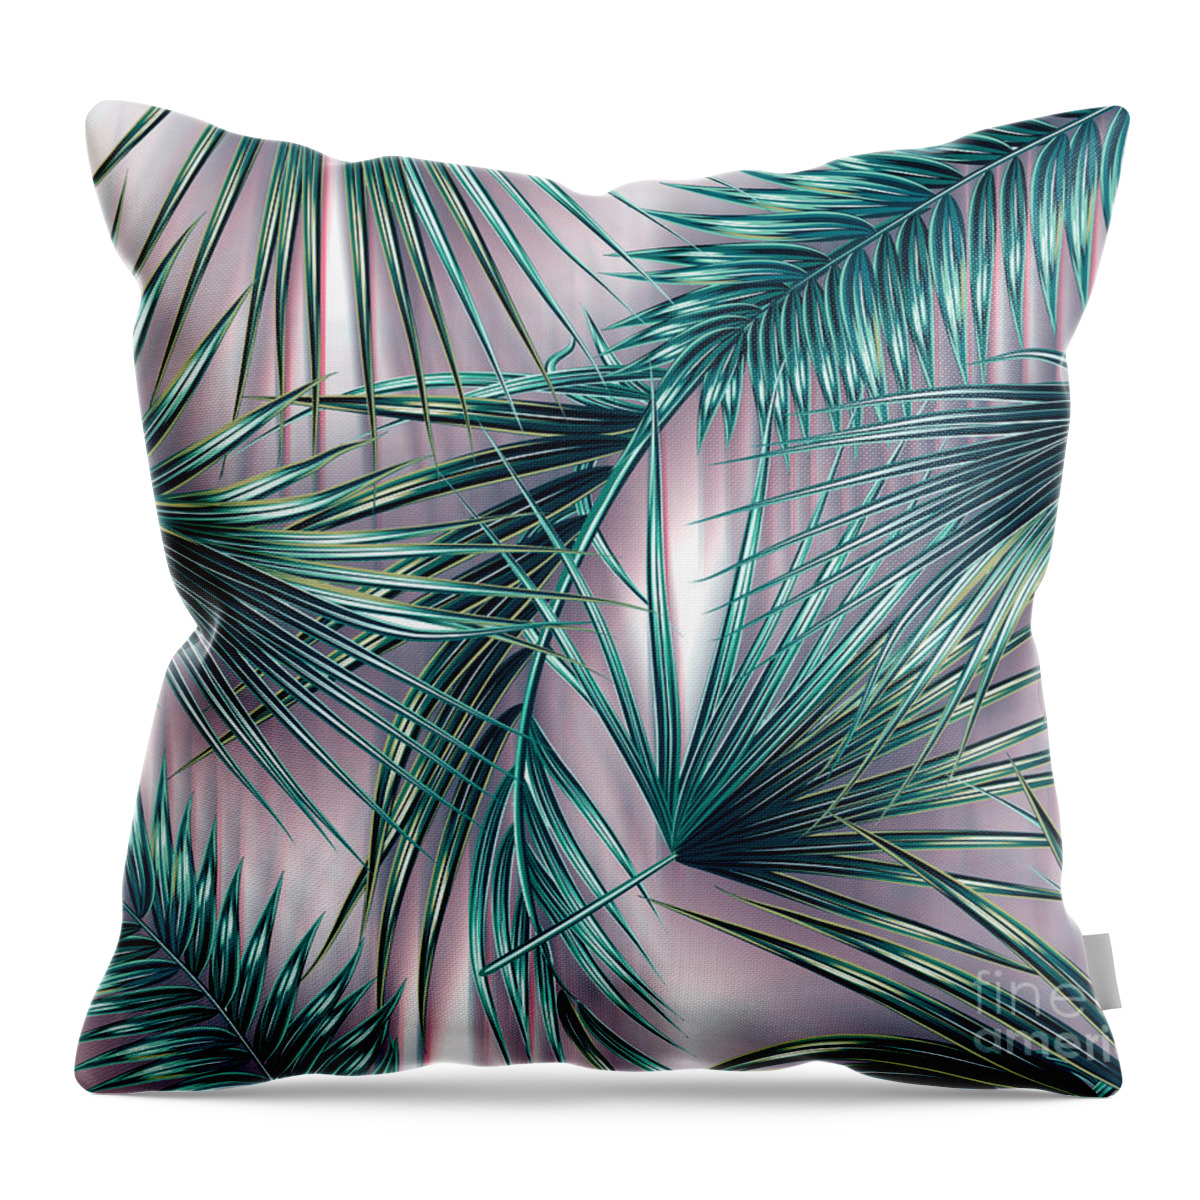 Summer Throw Pillow featuring the digital art Tropicana by Mark Ashkenazi